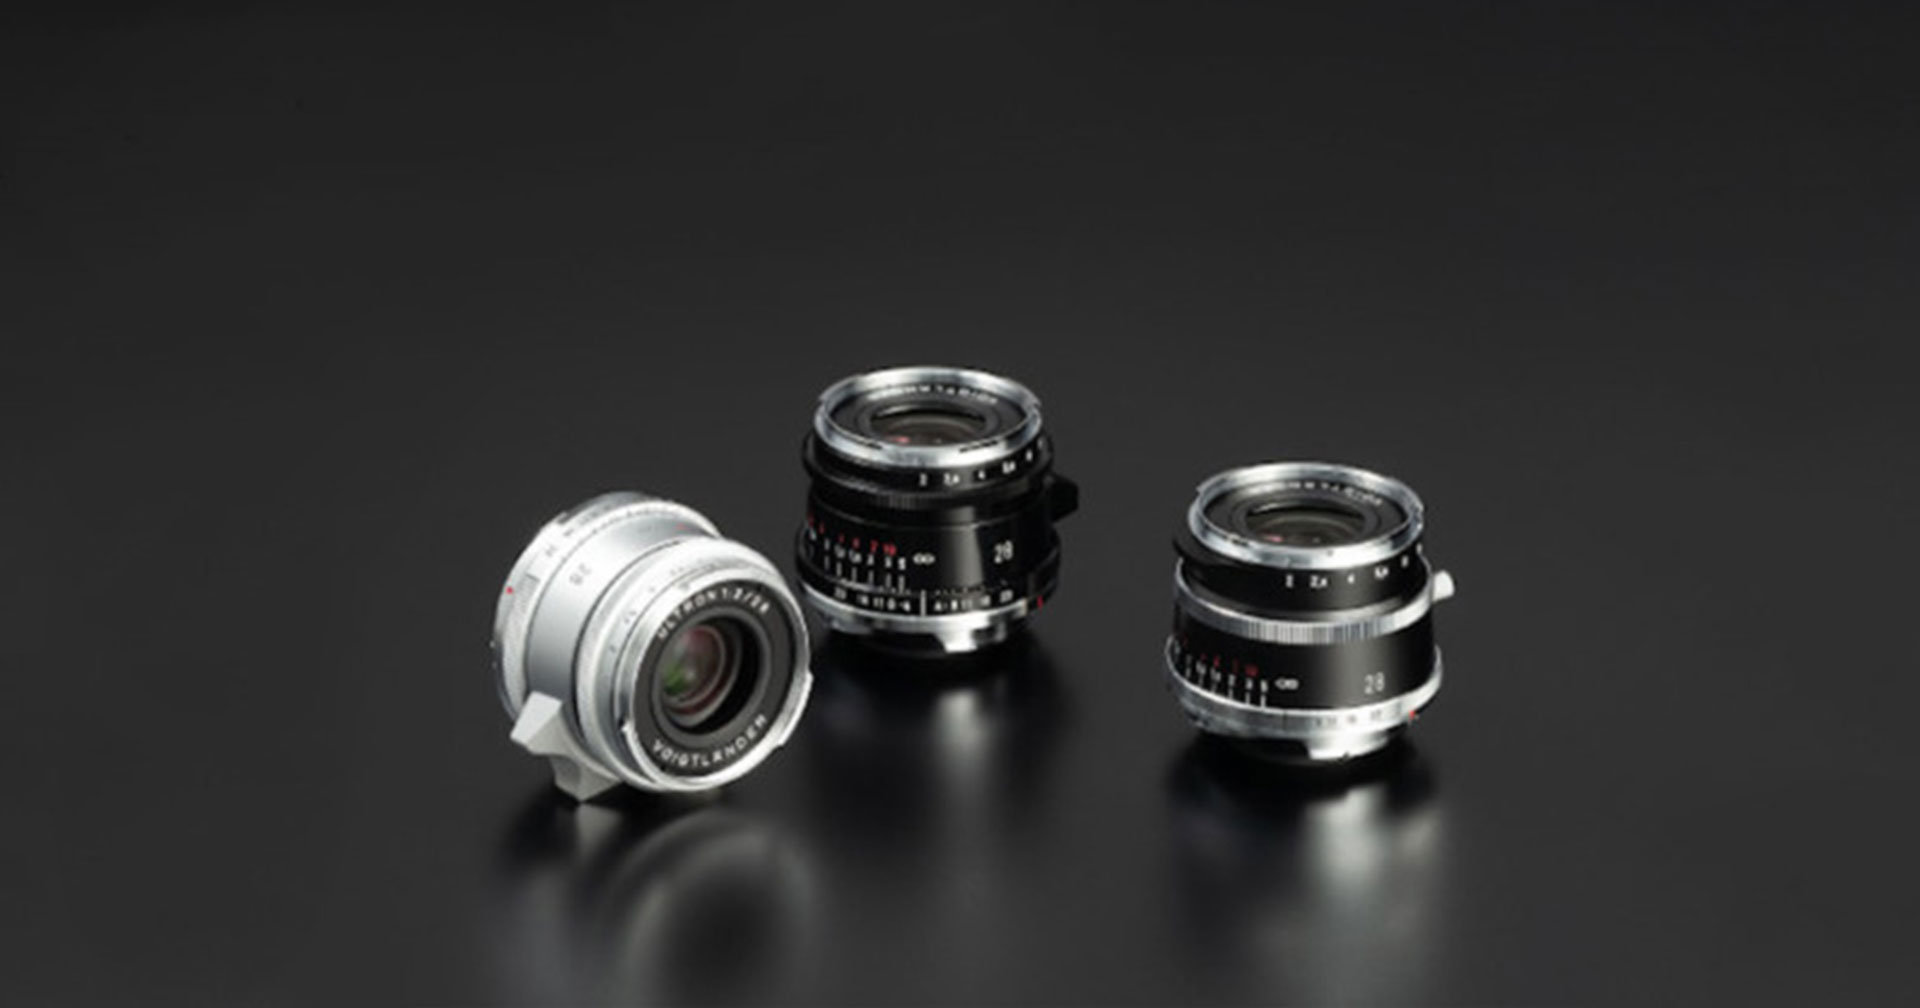 Voigtlander เปิดตัวเลนส์์มุมกว้าง 28mm f/2 Ultron Vintage Line เมาท์ Leica M